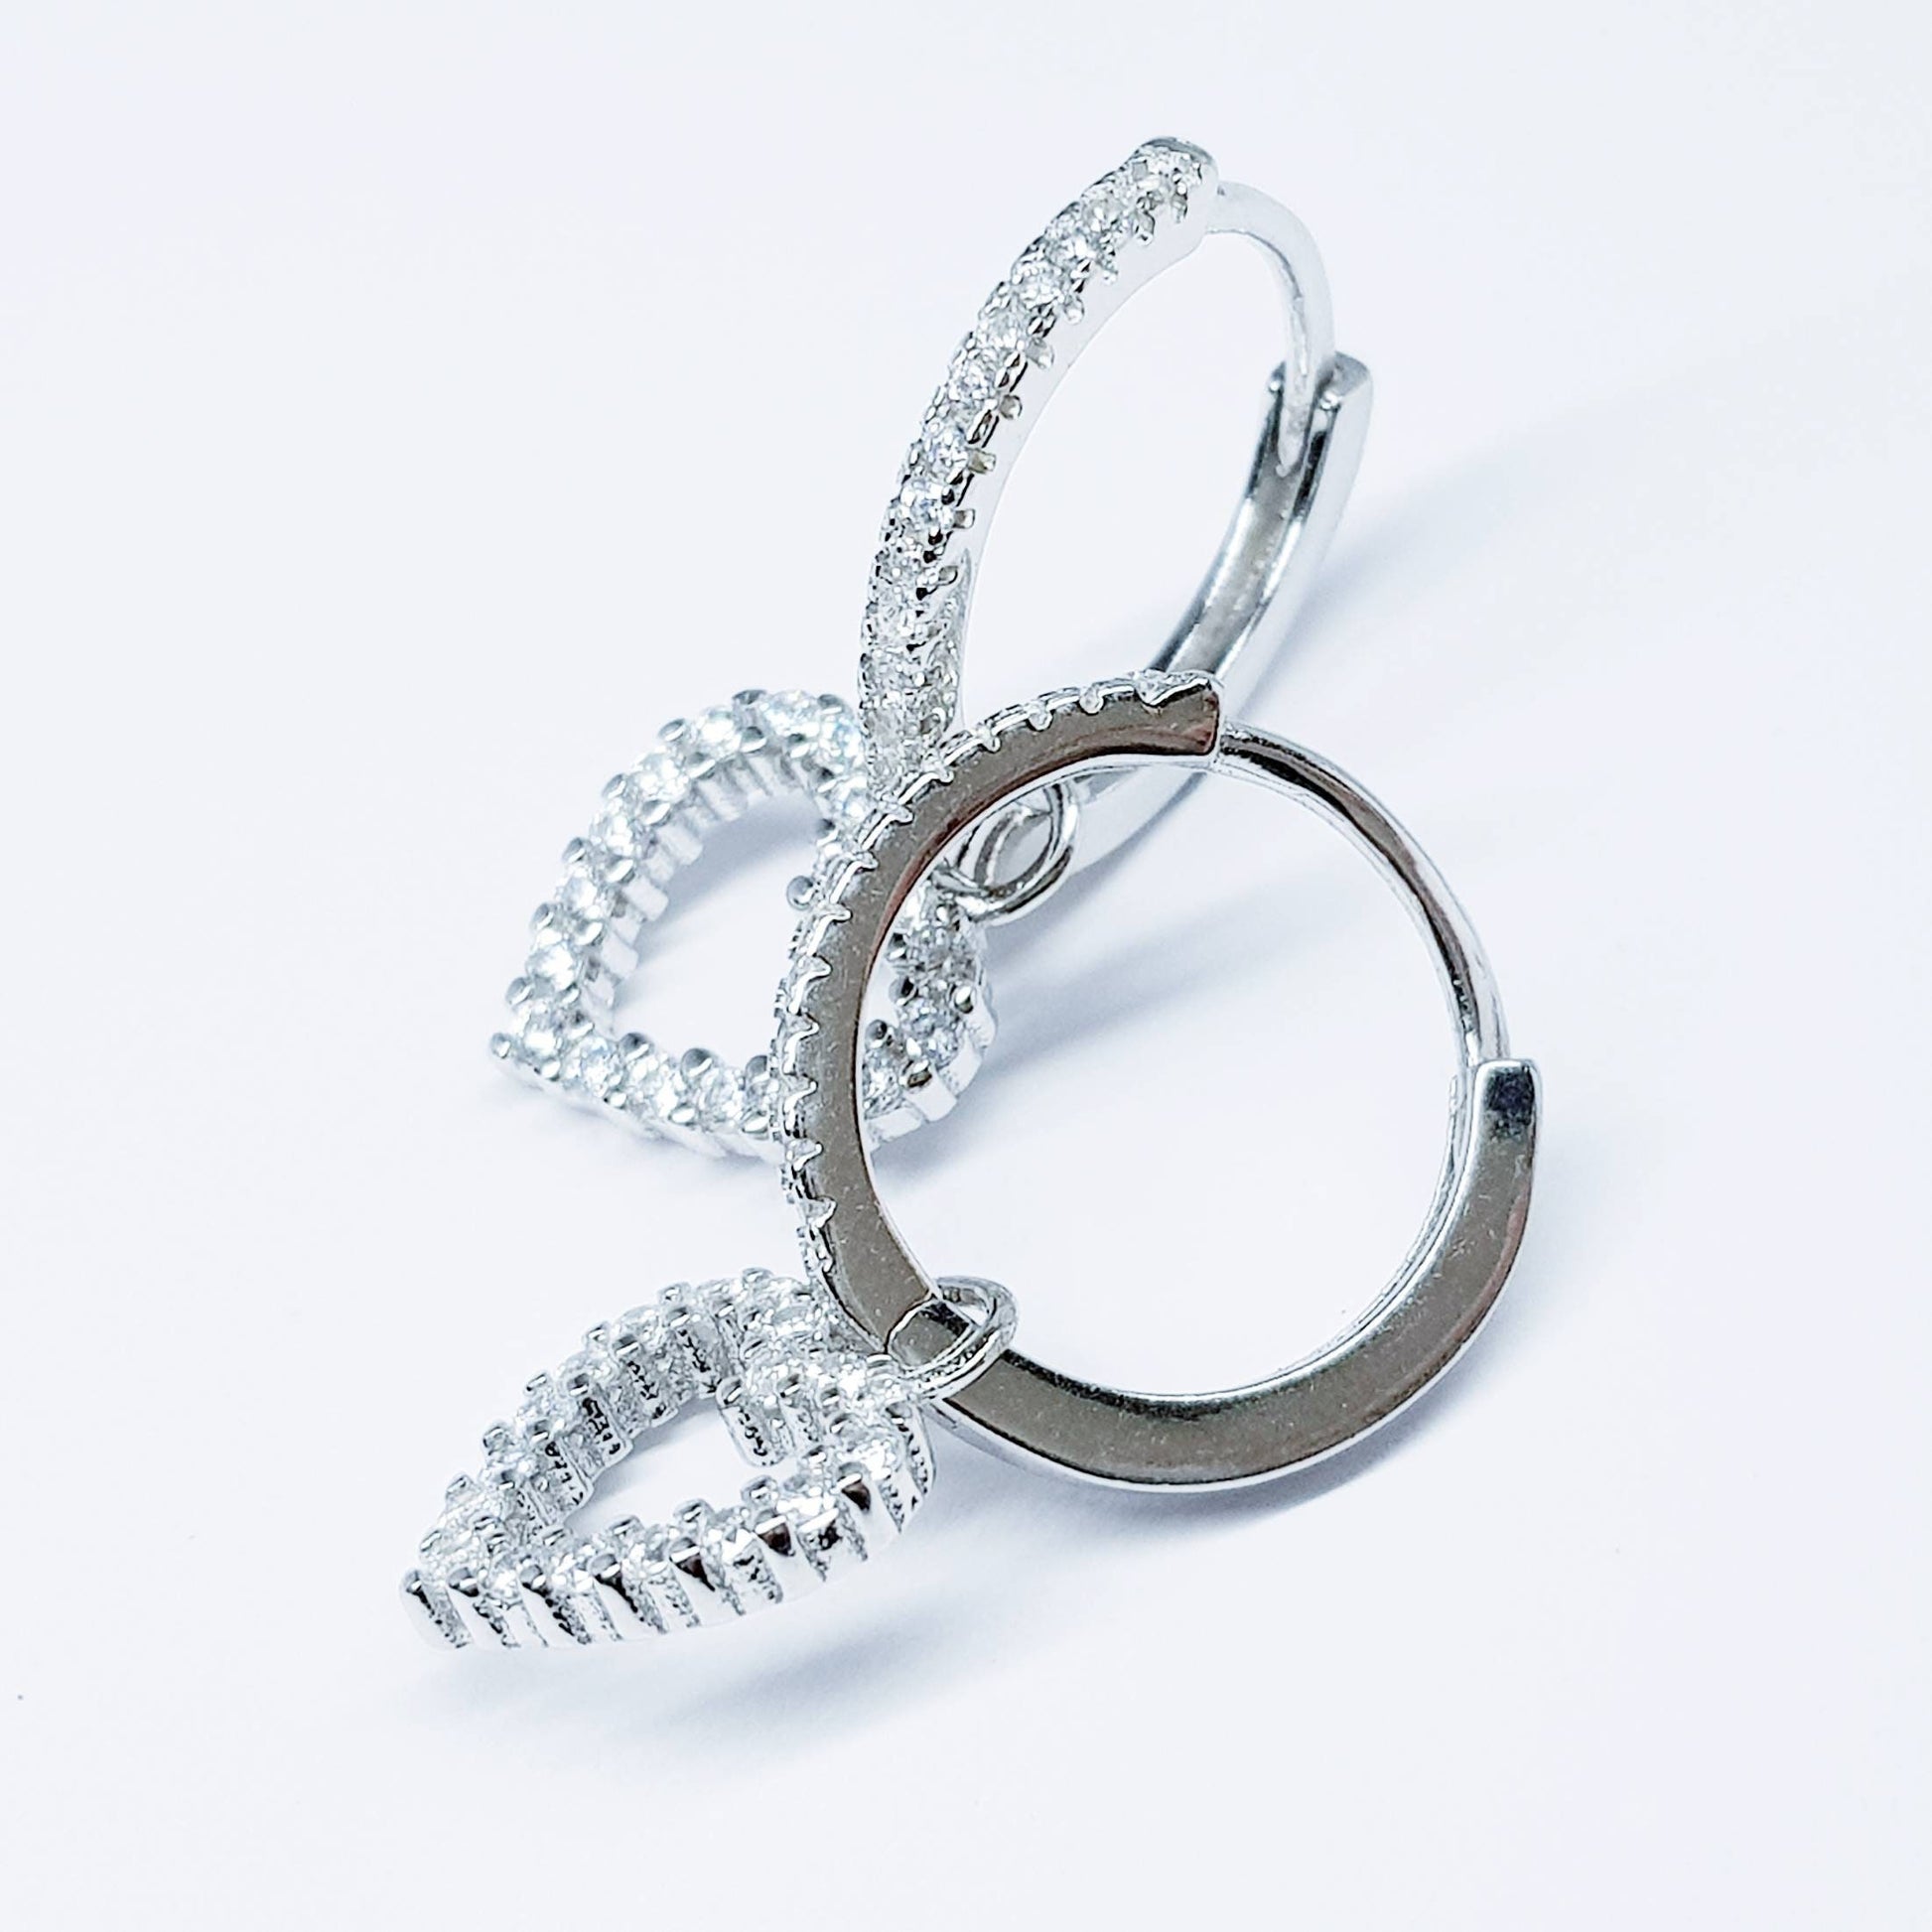 Thin hoop earrings, with removable heart charm, two earrings in one, silver Huggie earrings